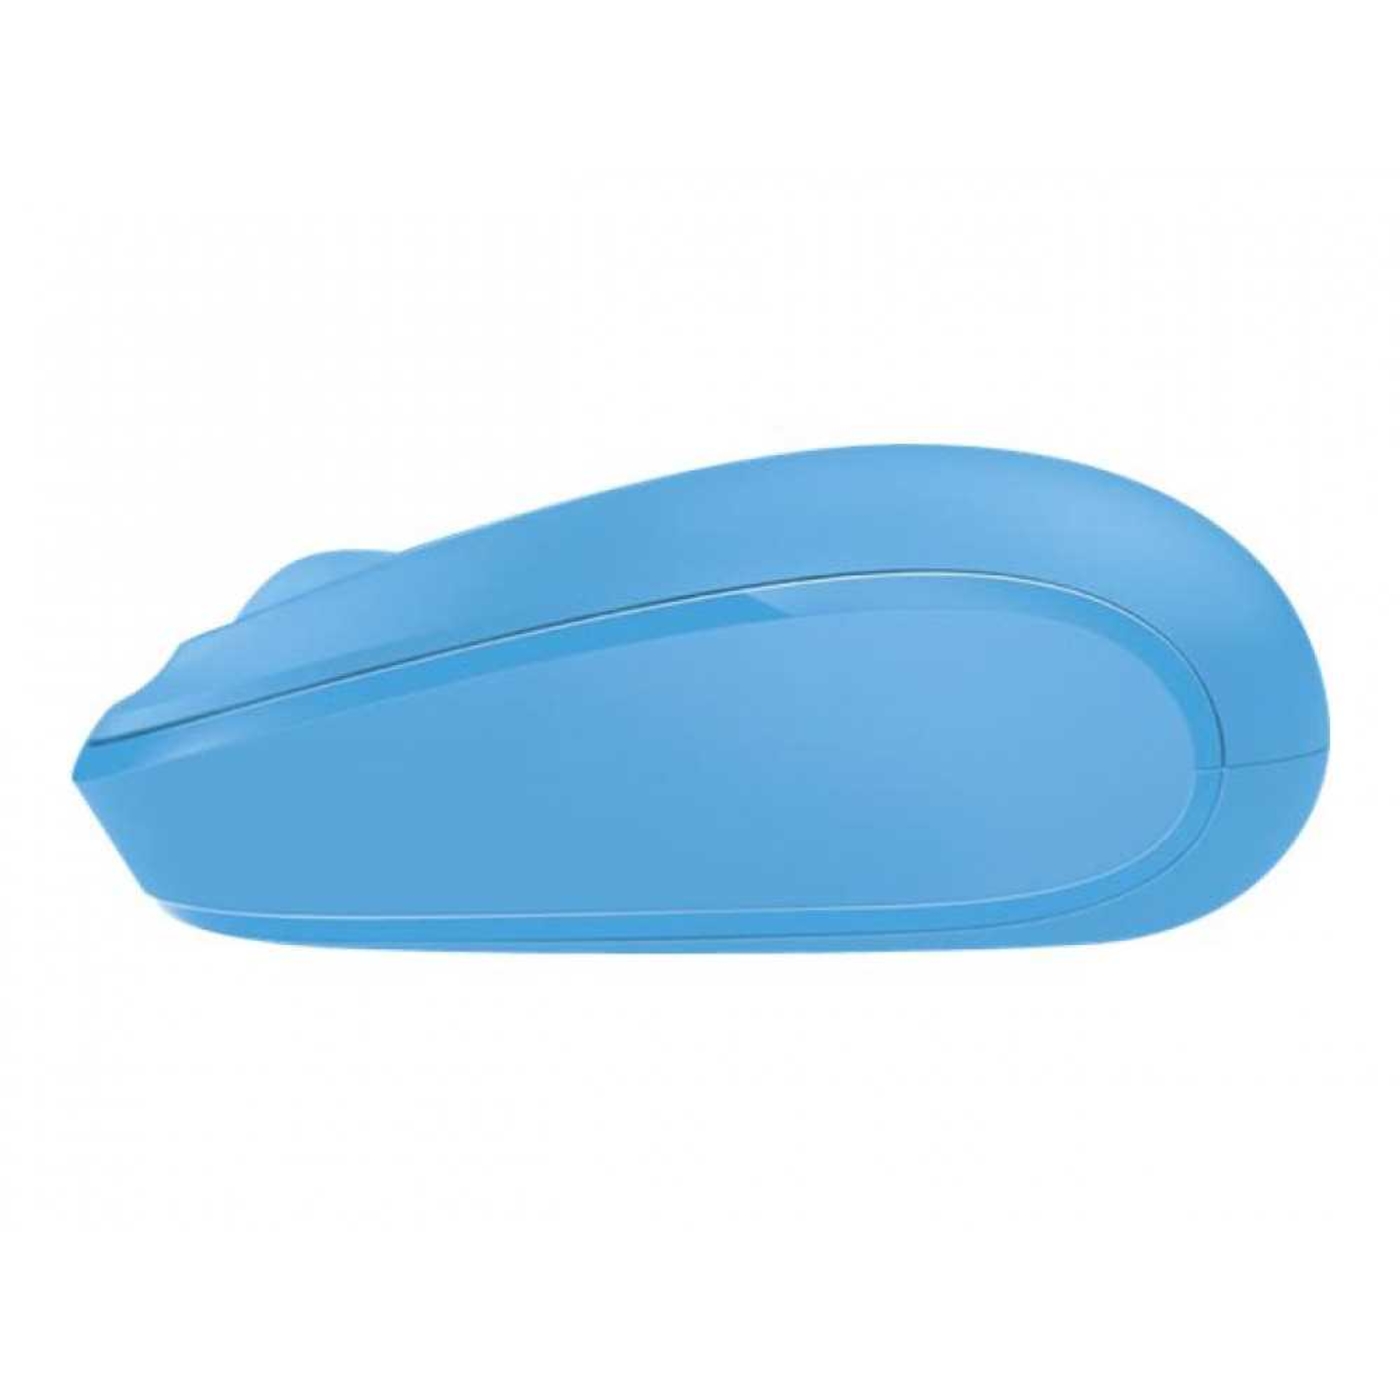 Mouse MICROSOFT Inalámbrico Óptico 1850 Mobile Azul Cyan